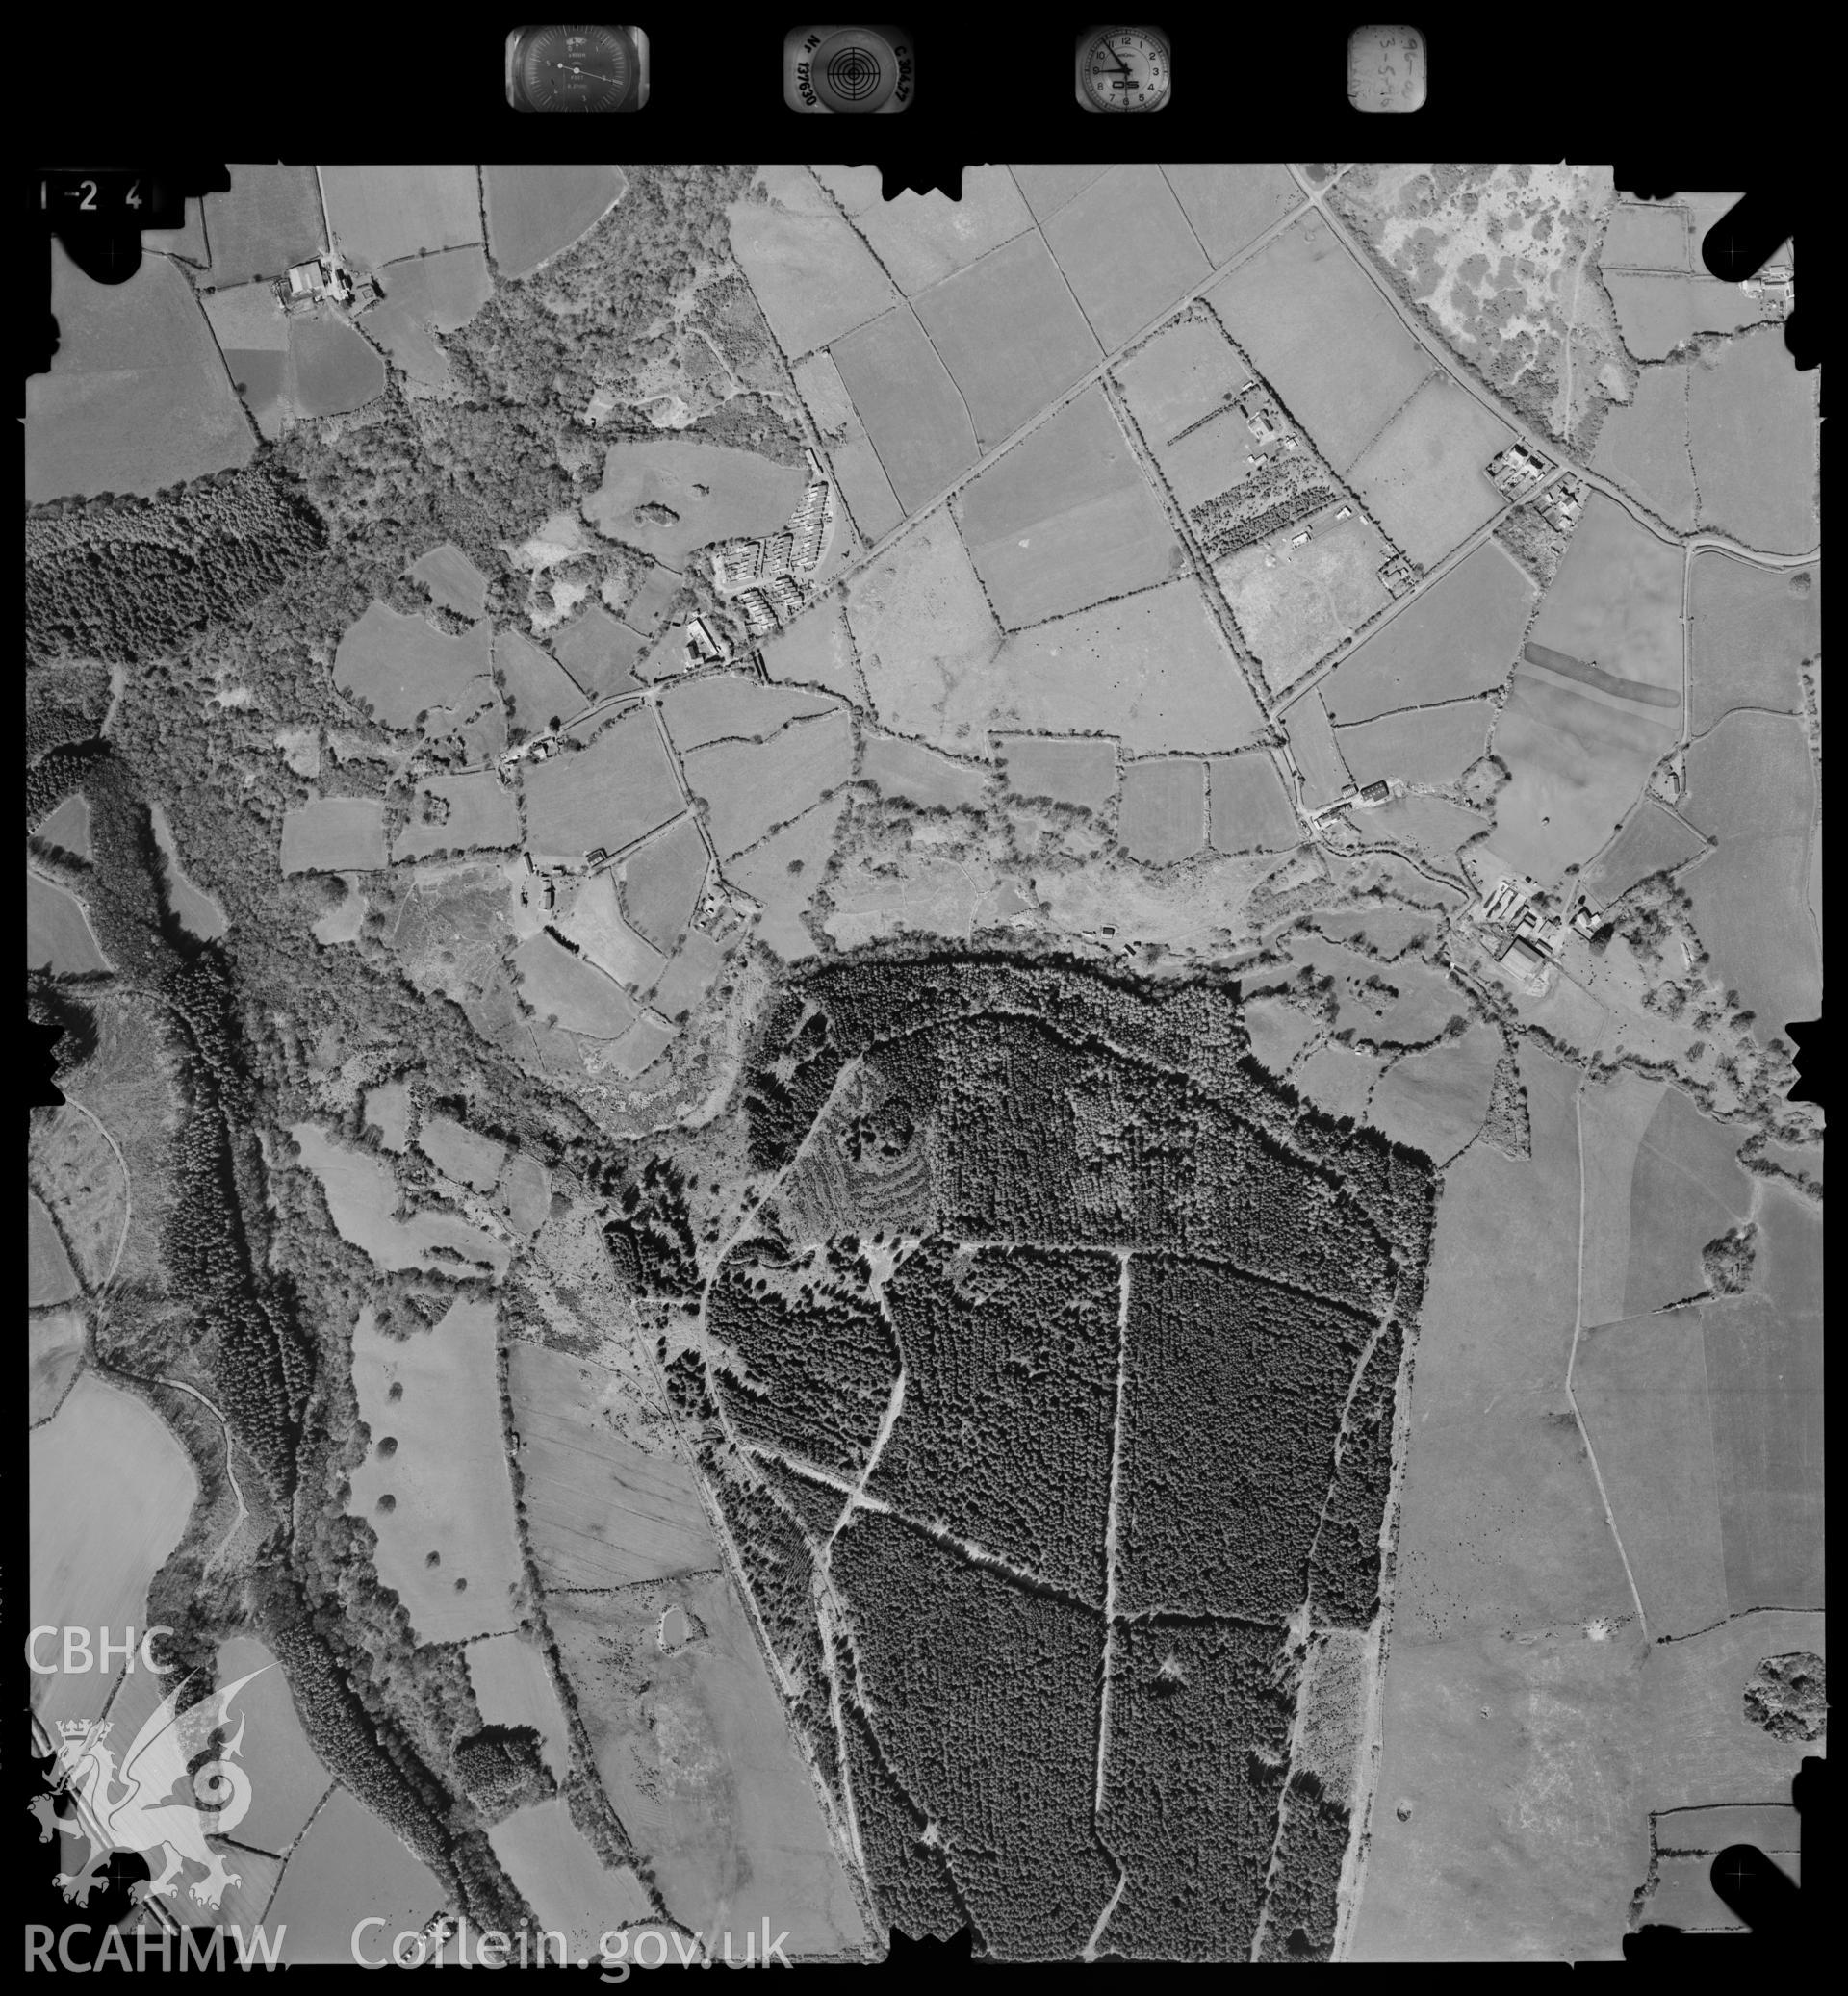 Digitized copy of an aerial photograph showing Llanteg area, Pembrokeshire, SN1842109229, taken by Ordnance Survey, 1996.